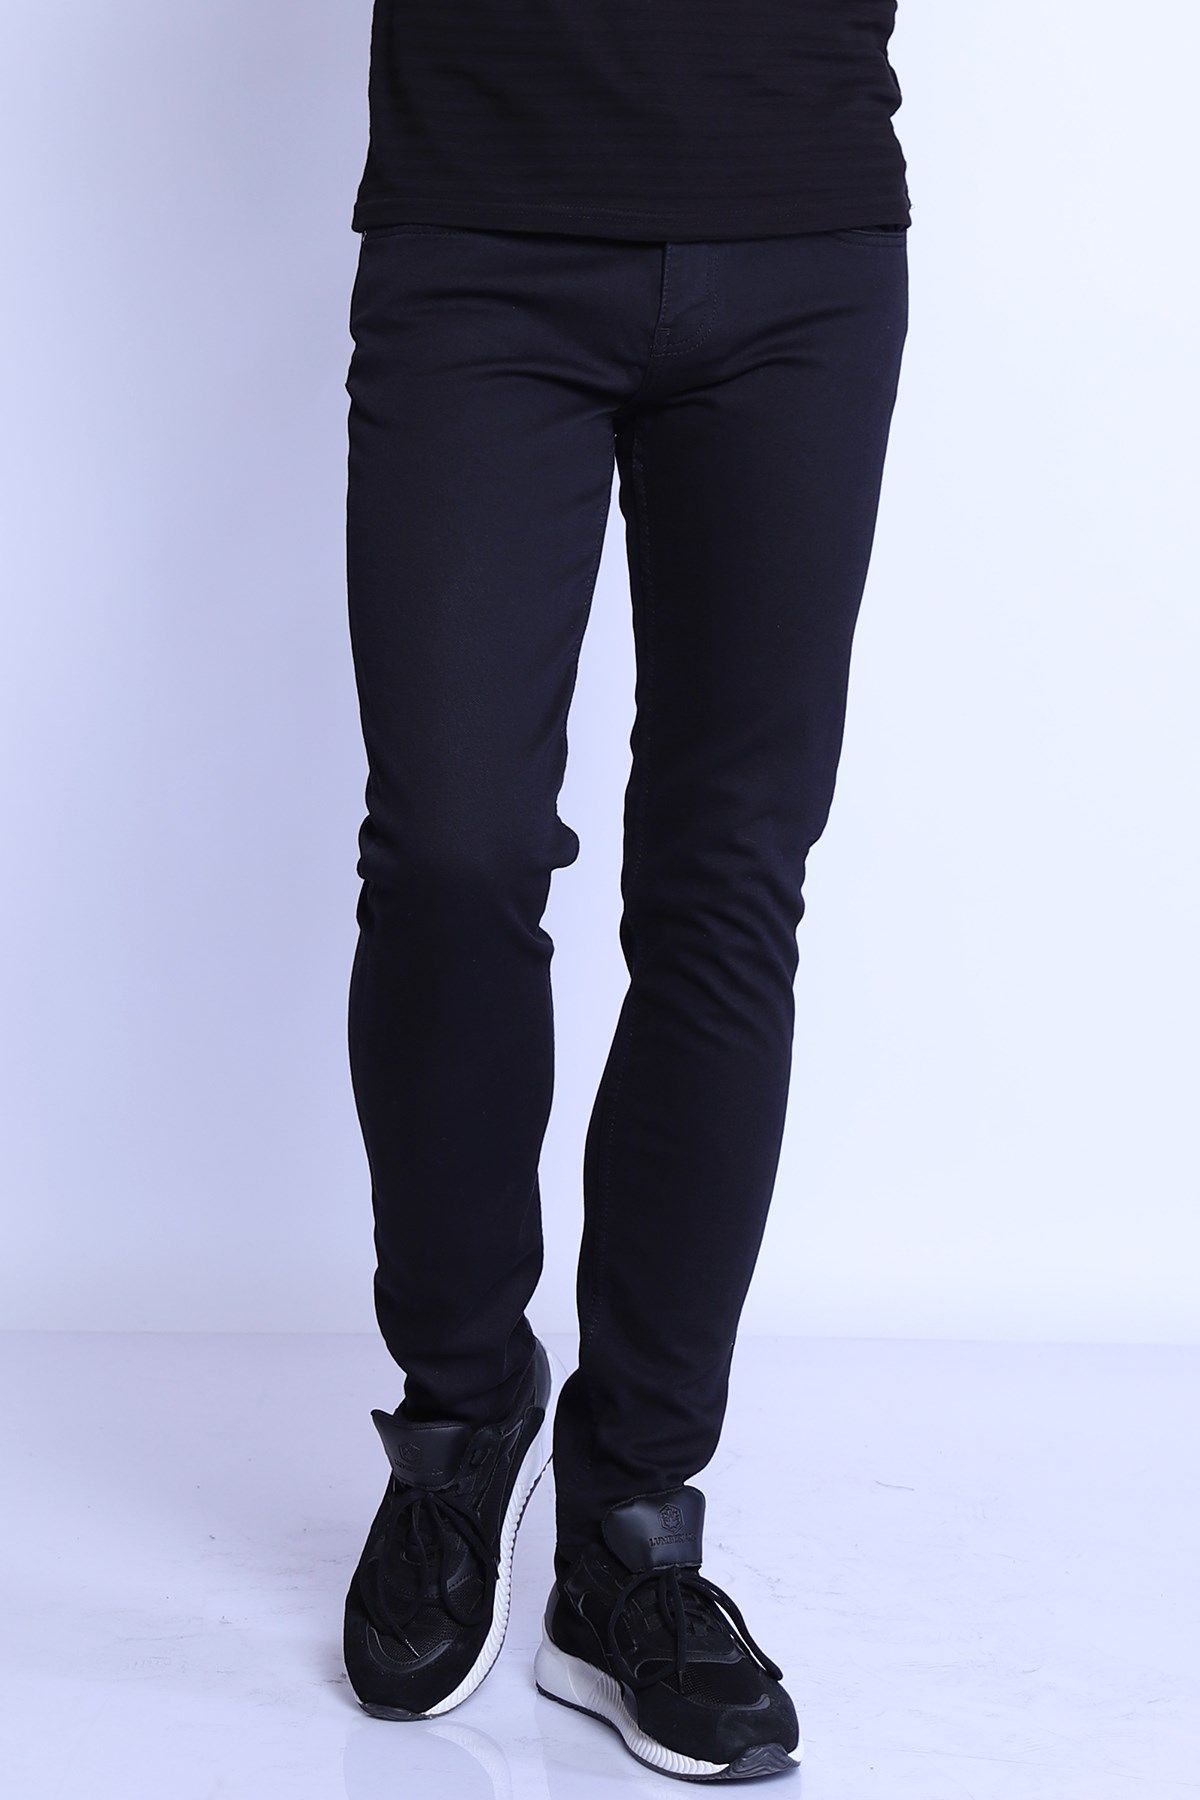 Erkek Slim Fit  Normal Bel Pantolon Gabon 626-06 BlackErkek Slim Fit  Normal Bel Pantolon Gabon 626-06 Black